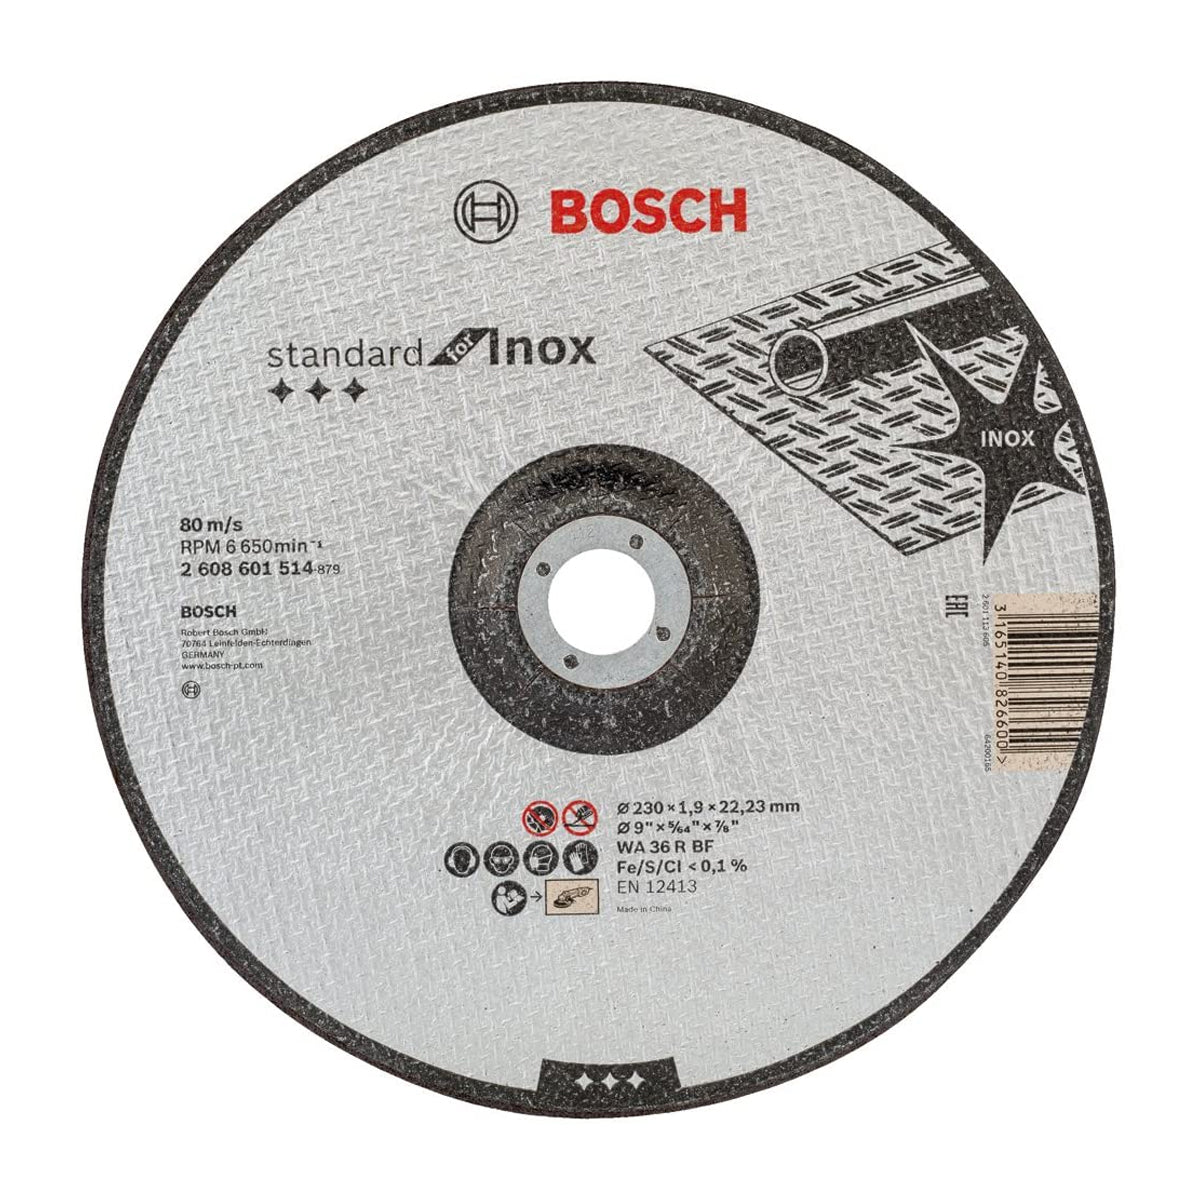 Bosch 230mm Standard Inox Cutting Disc 2608601514